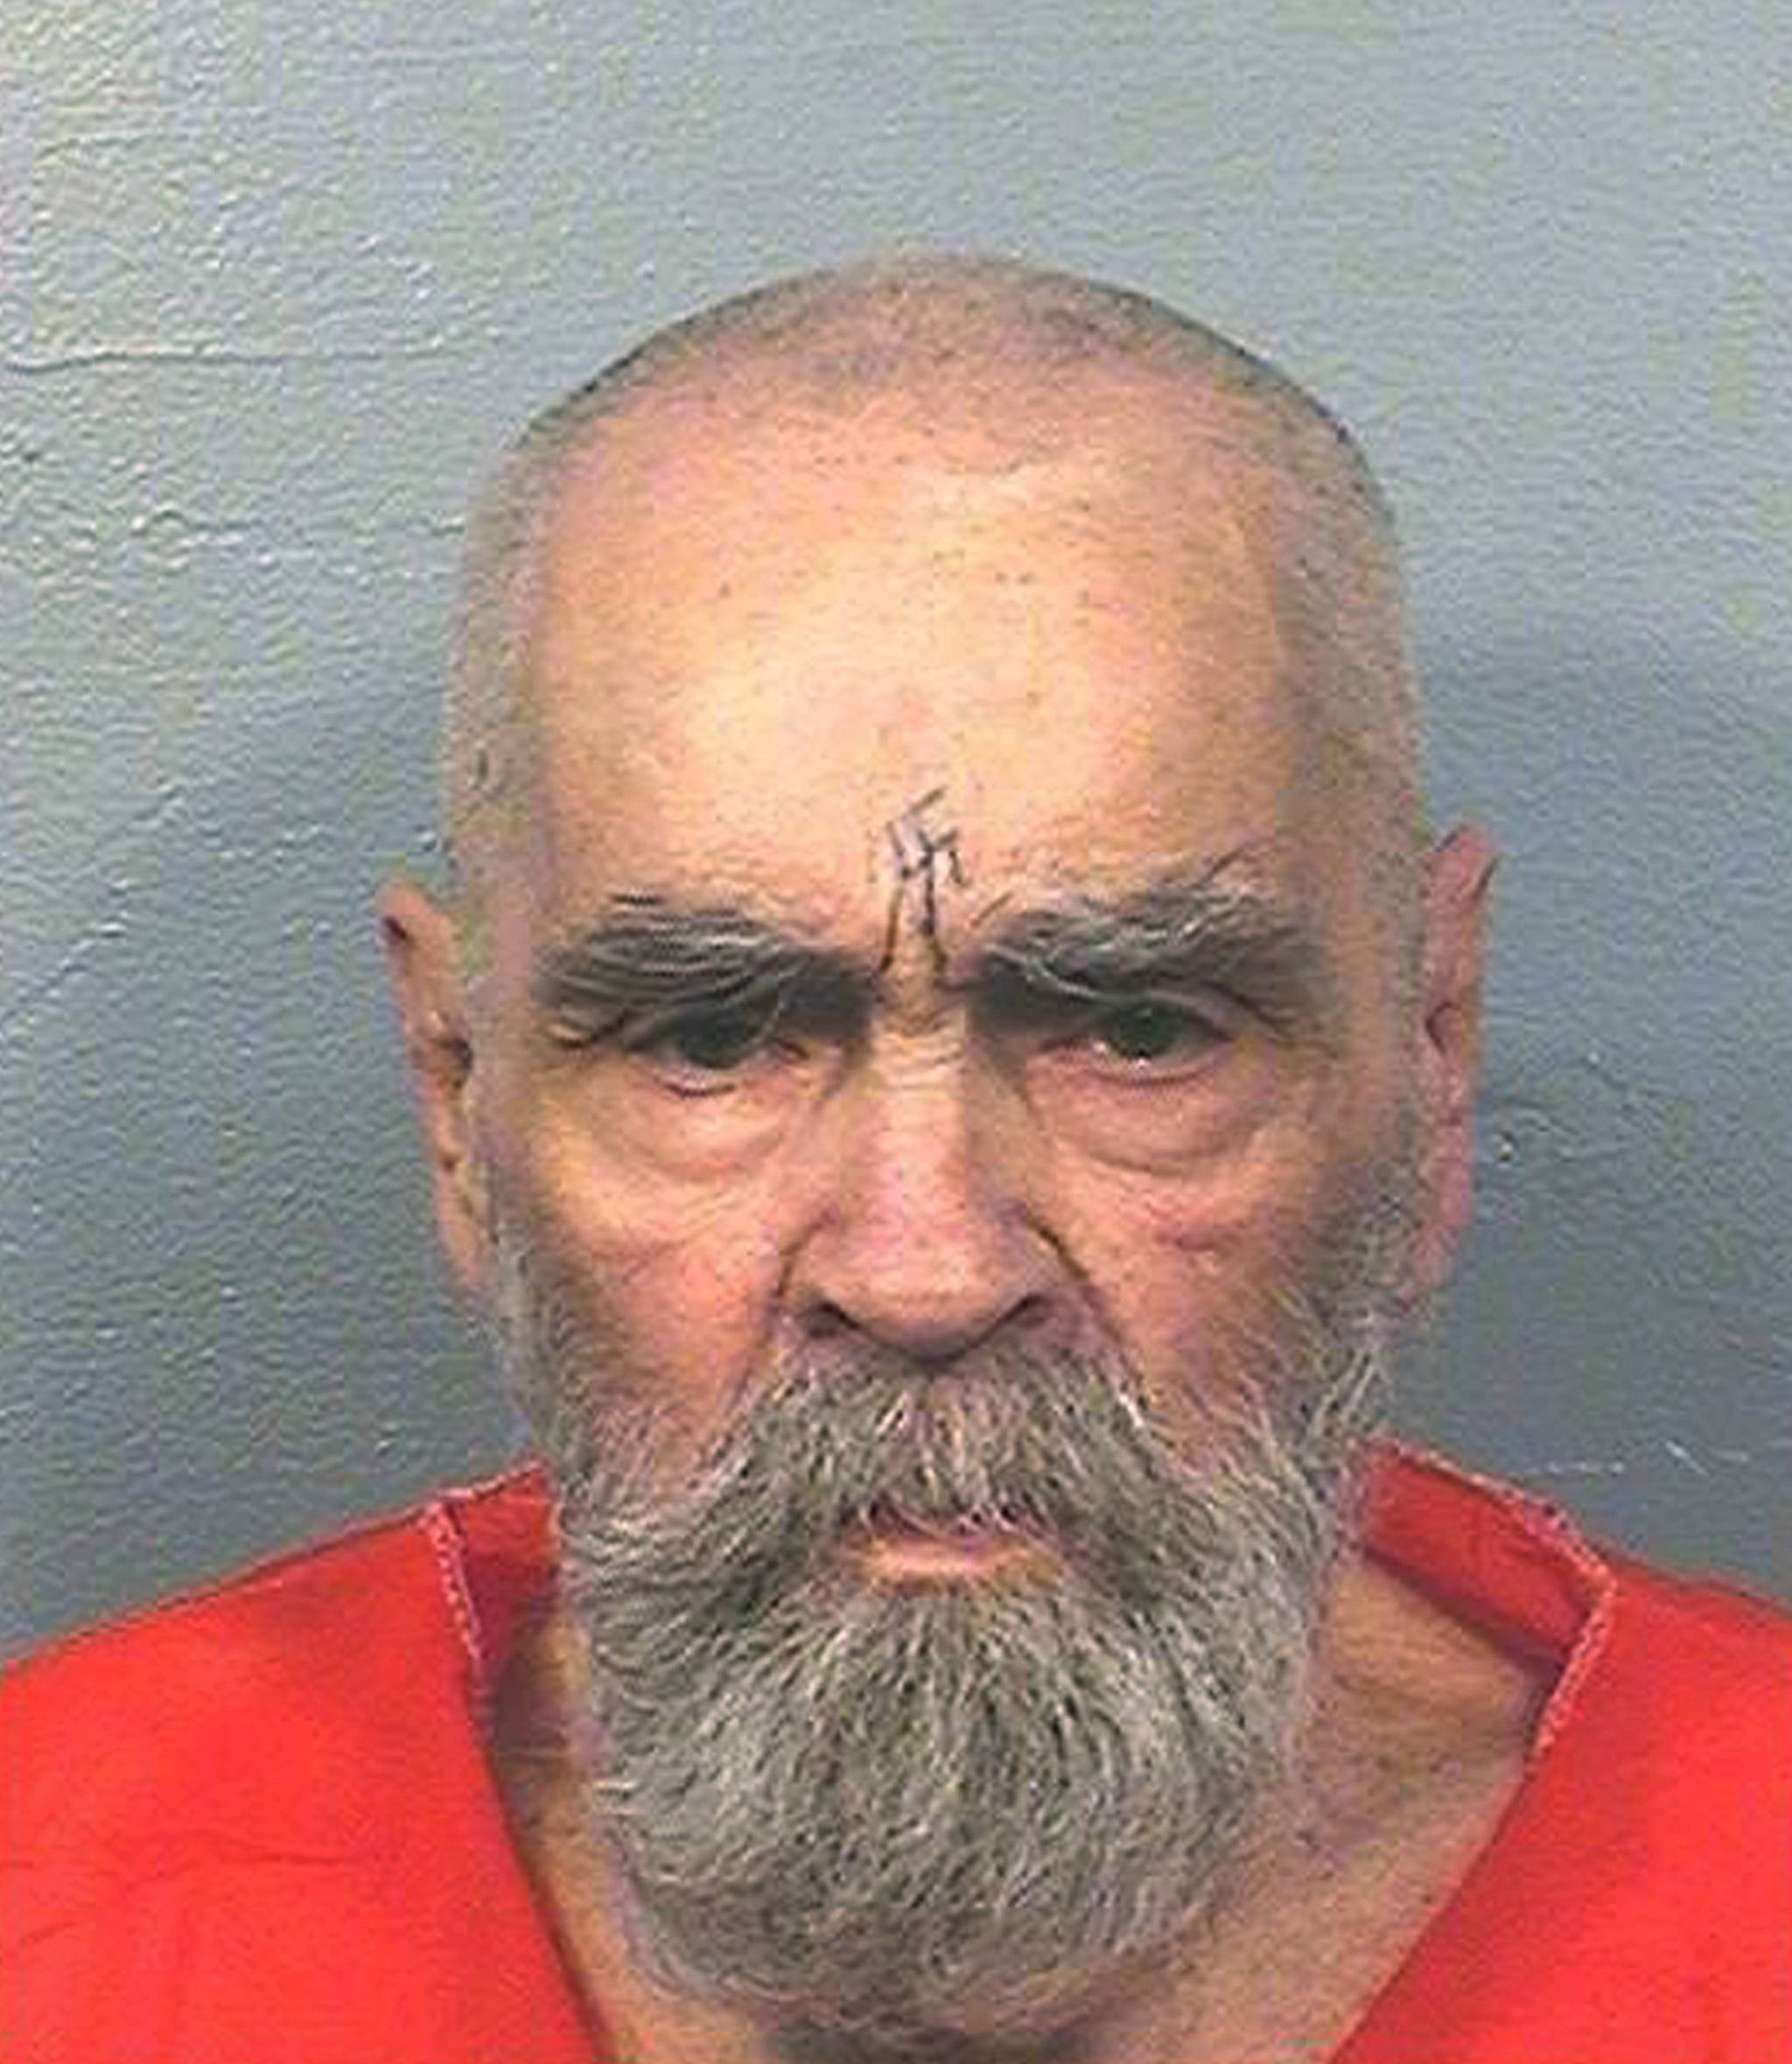 Charles Manson. (California Department of Corrections and Rehabilitation via AP, File)